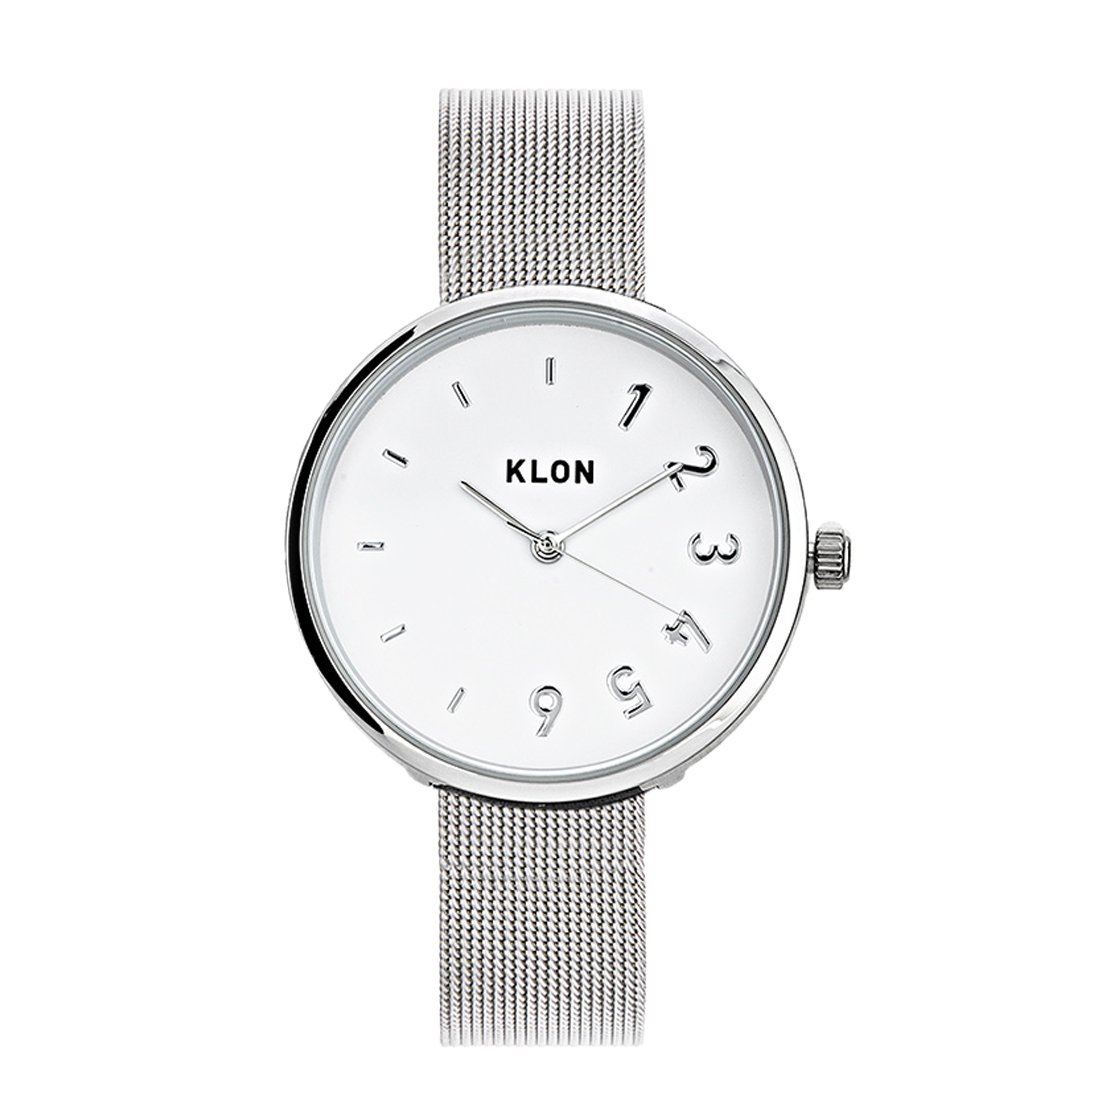 KLON CONNECTION DARING FIRST -SILVER MESH- 33mm カジュアル 腕時計